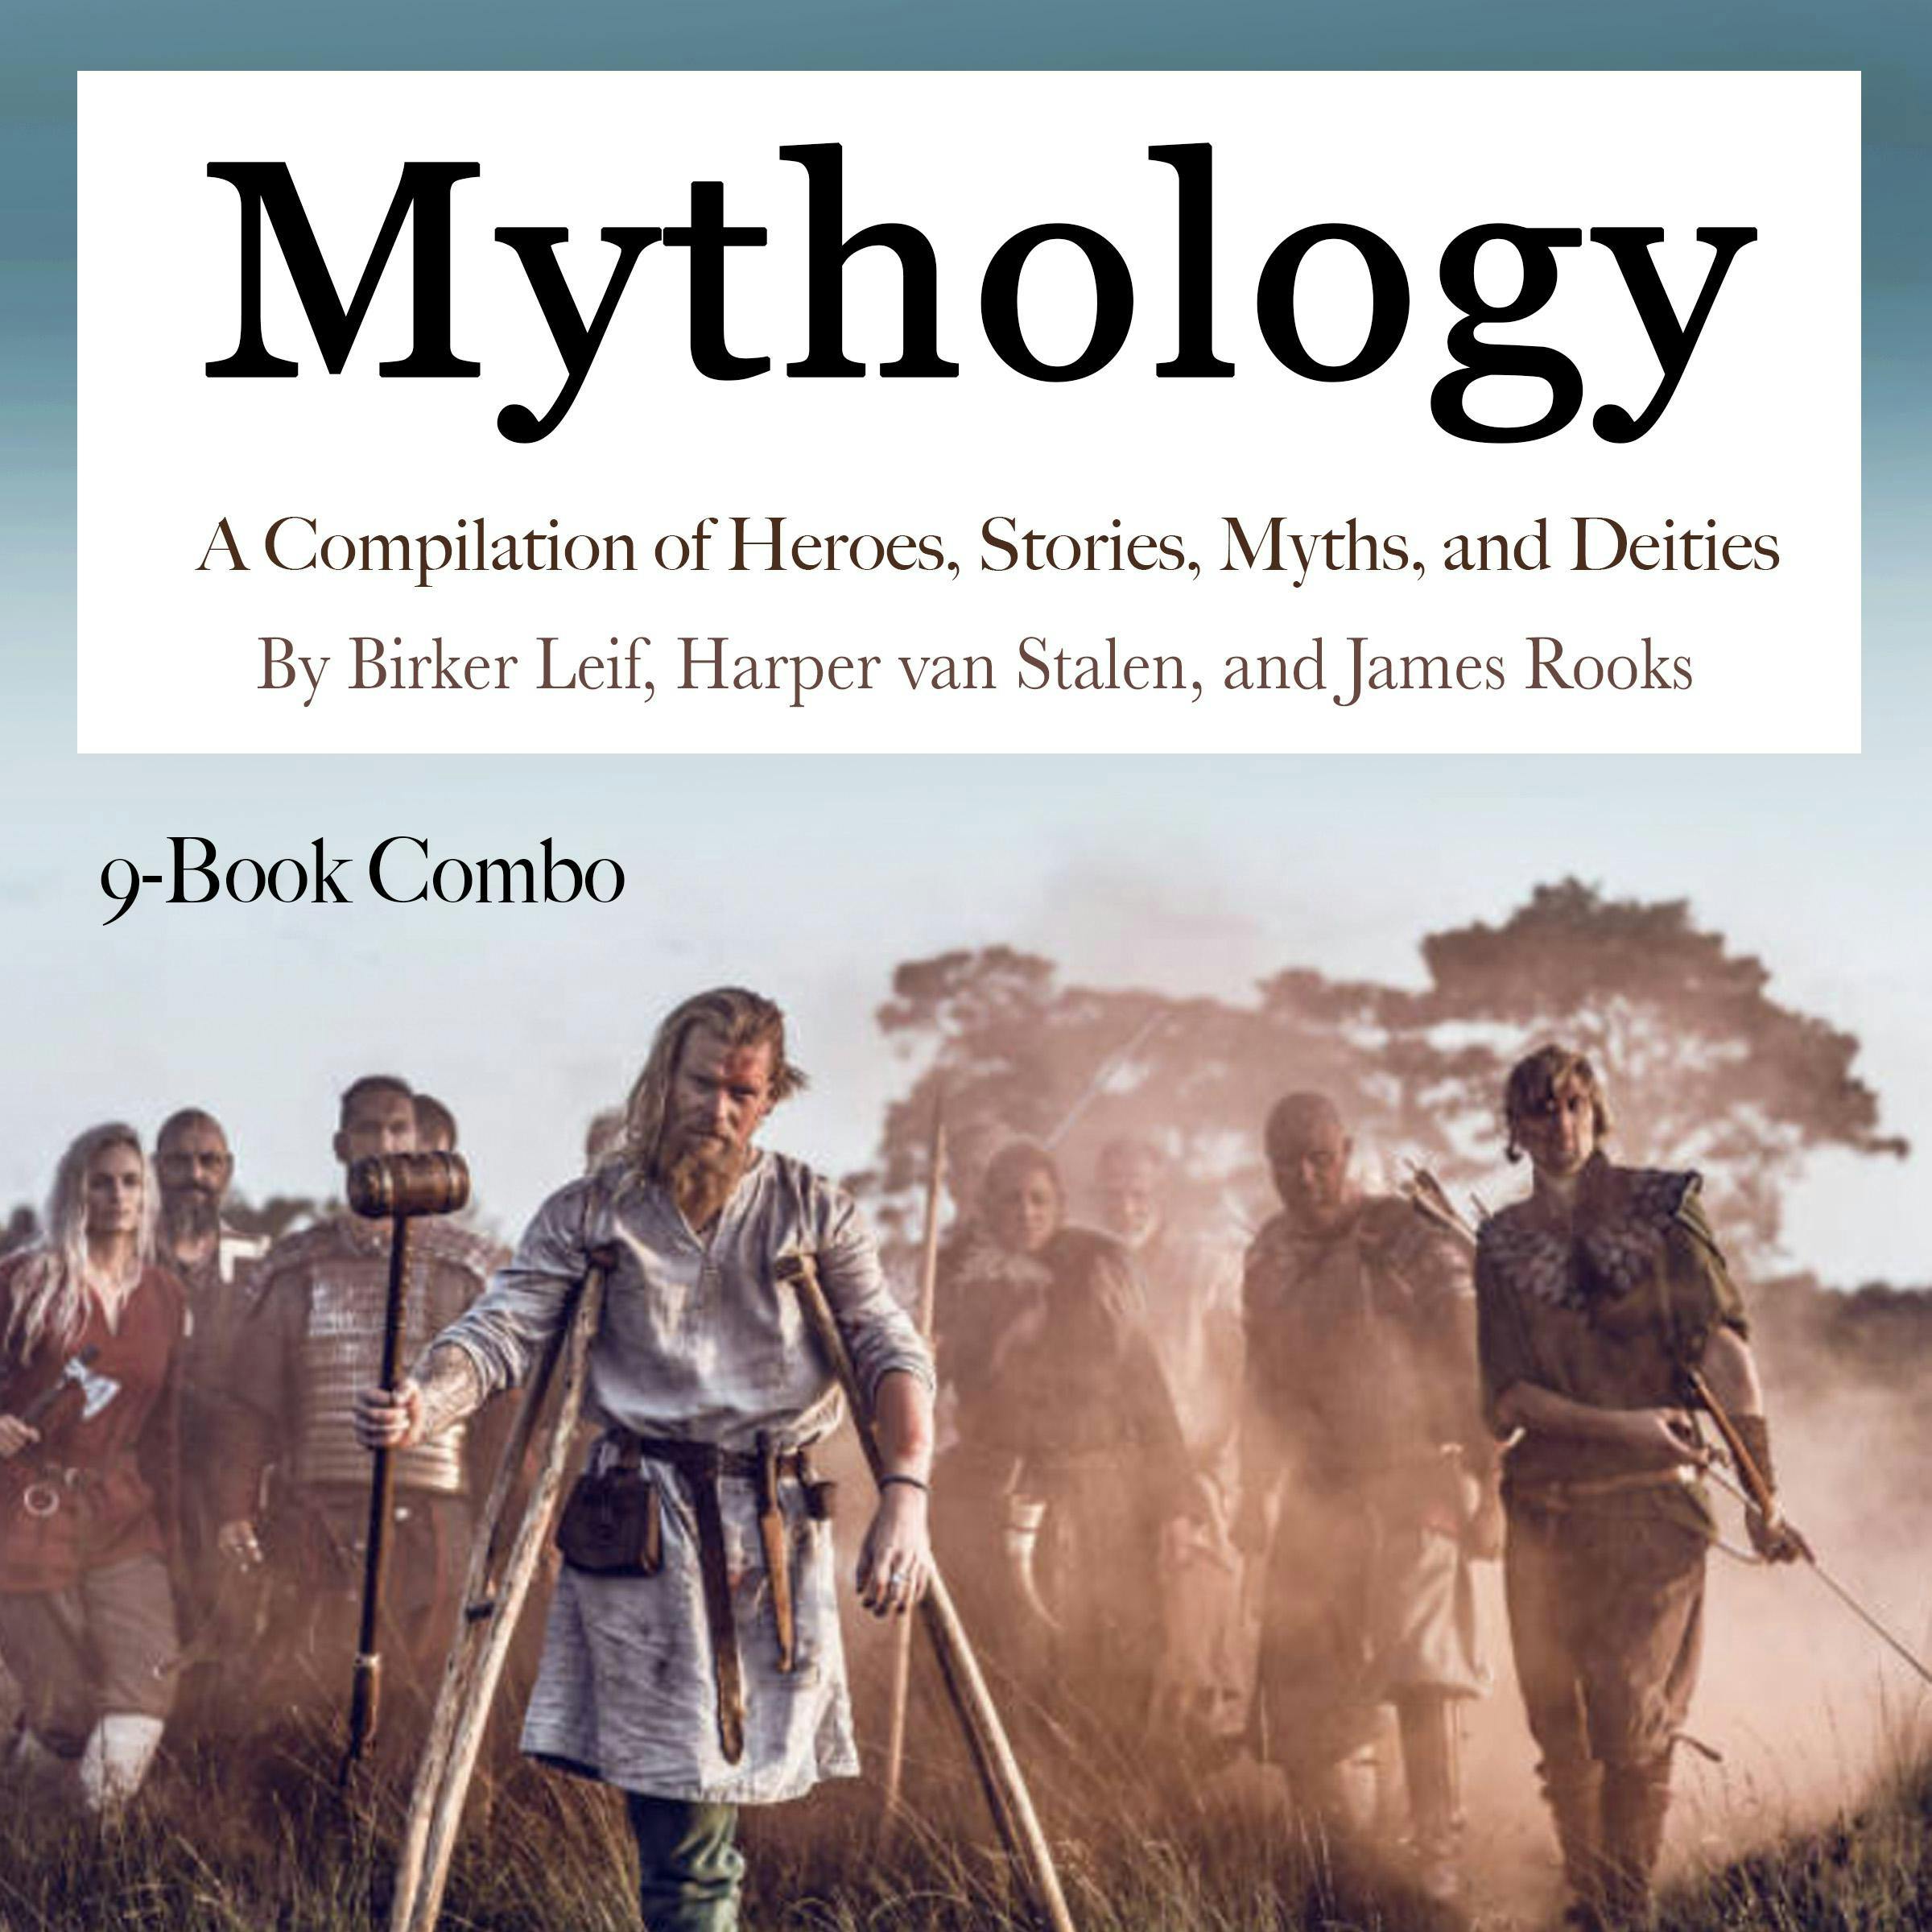 Mythology: A Compilation of Heroes, Stories, Myths, and Deities - James Rooks, Birker Leif, Harper van Stalen